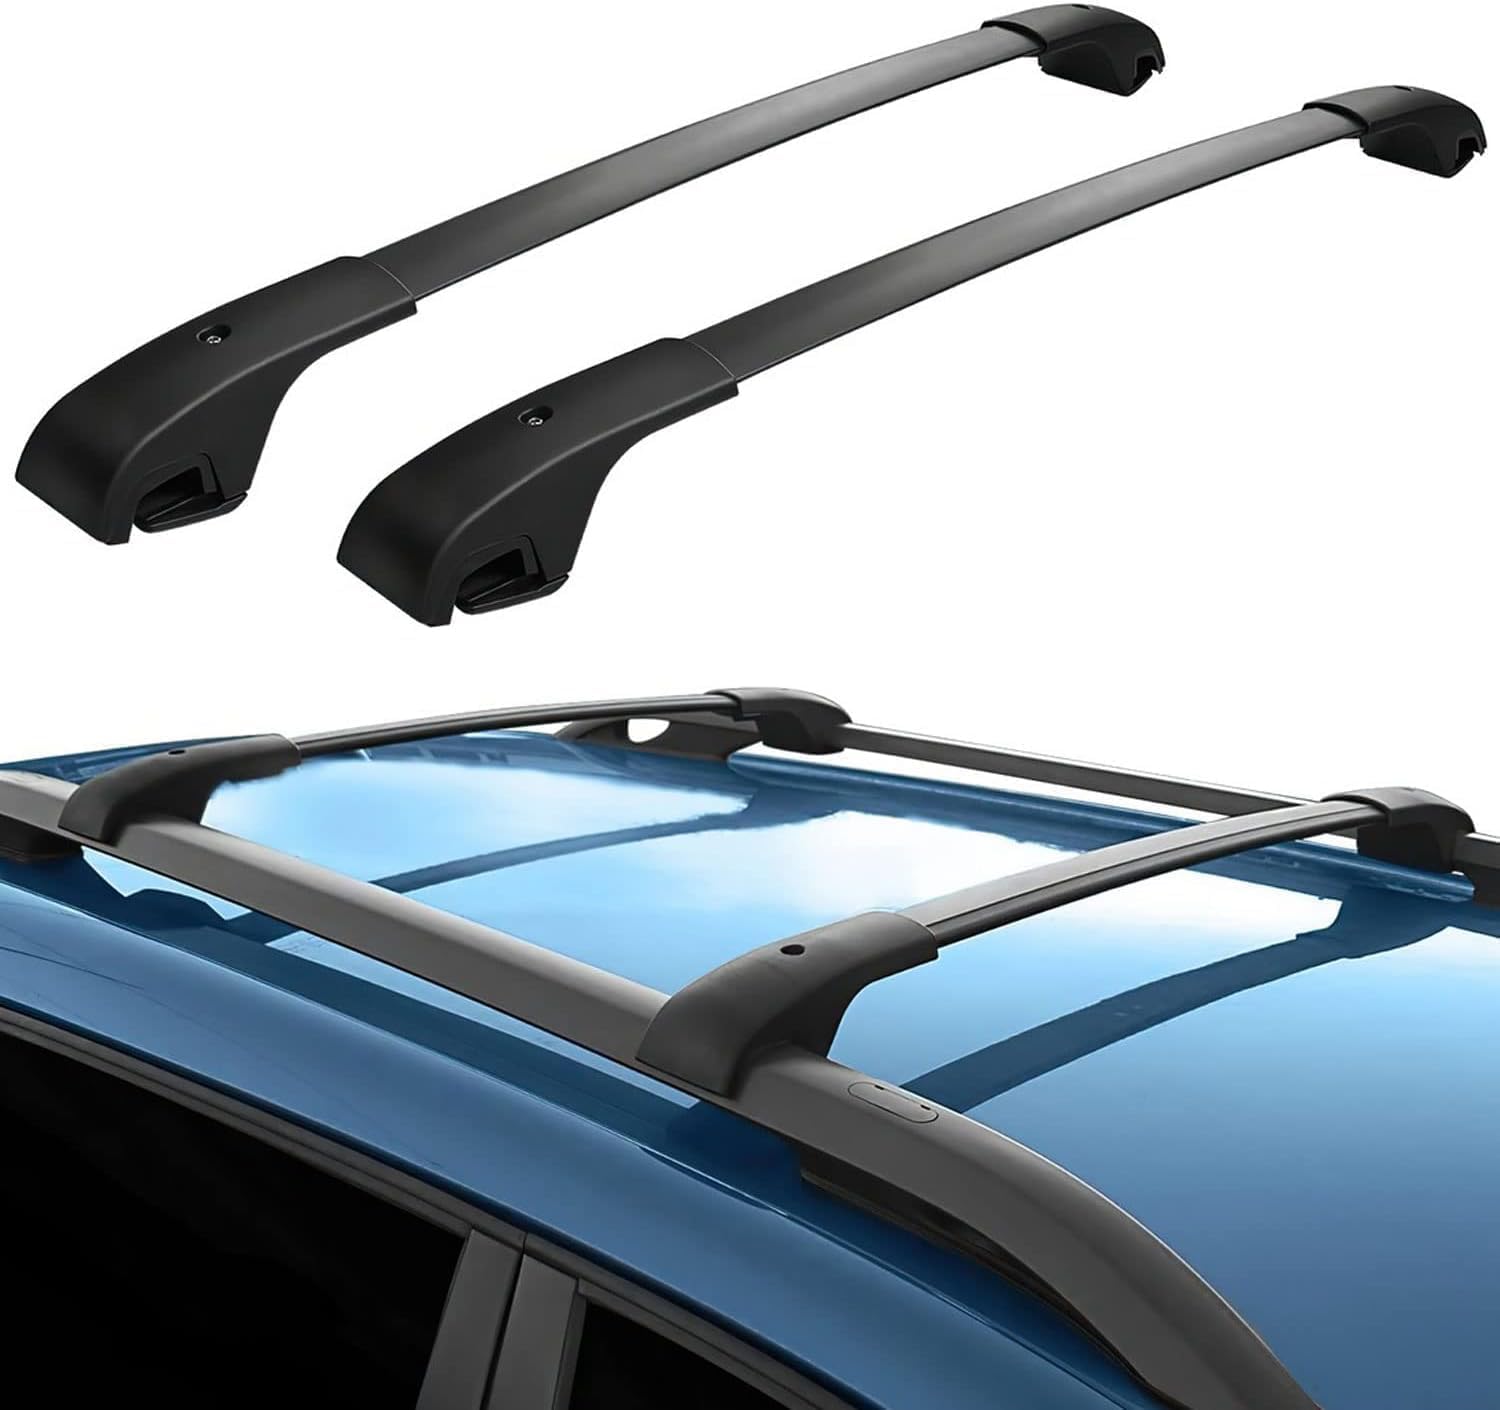 Dachträger Querträger geschlossene Träger passend für Hyundai Tucson SUV 2015-2020, Alu Grundträger Querbalken Set Relingträger Gepackträger Roof Rack von WUYJUN